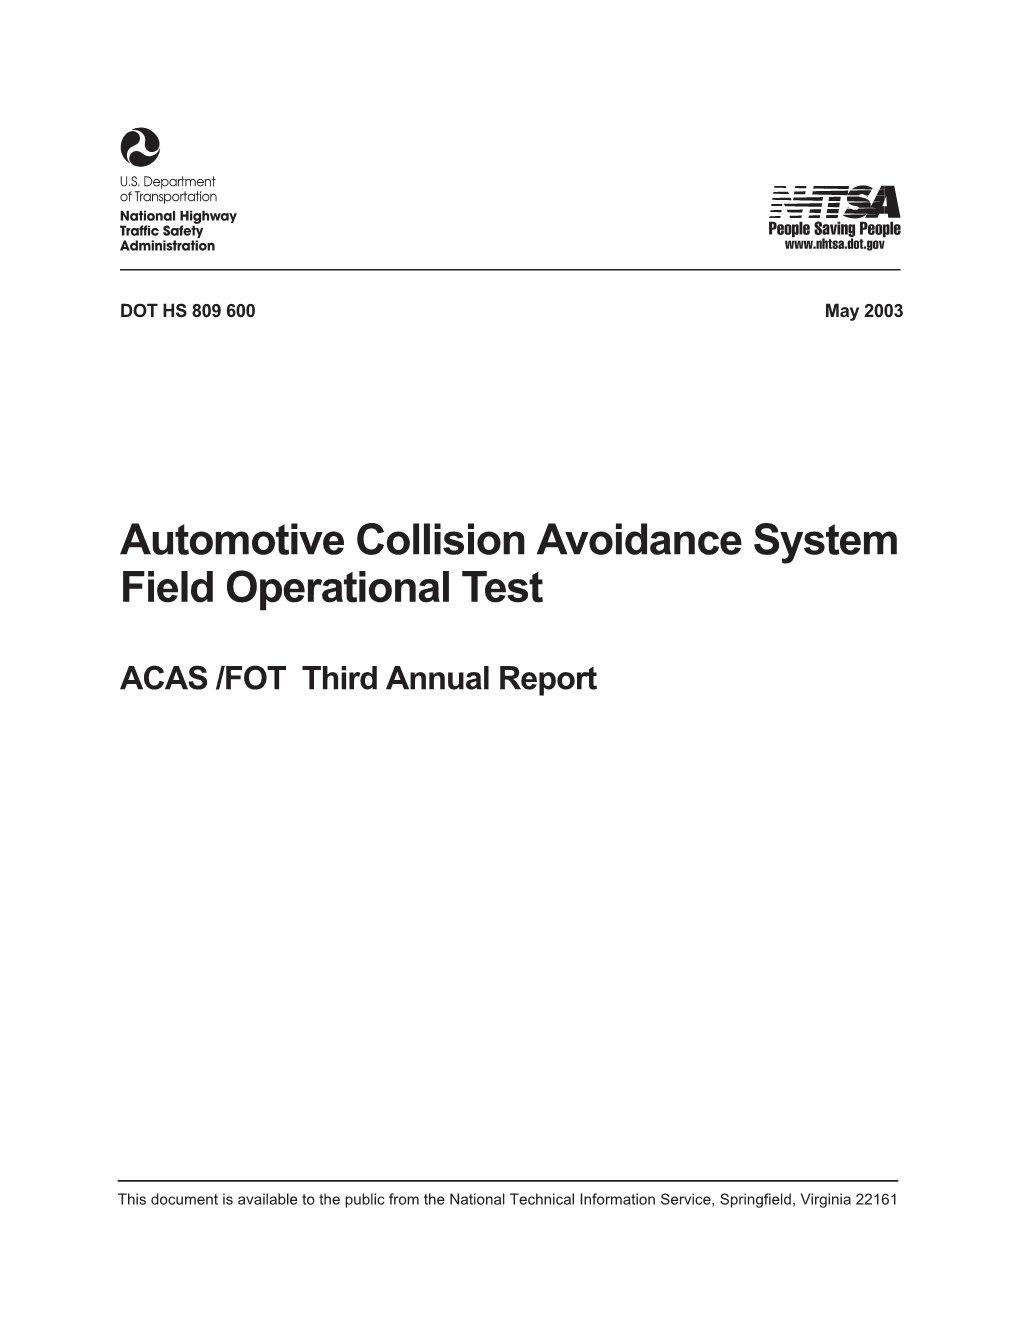 Automotive Collision Avoidance System Field Operational Test